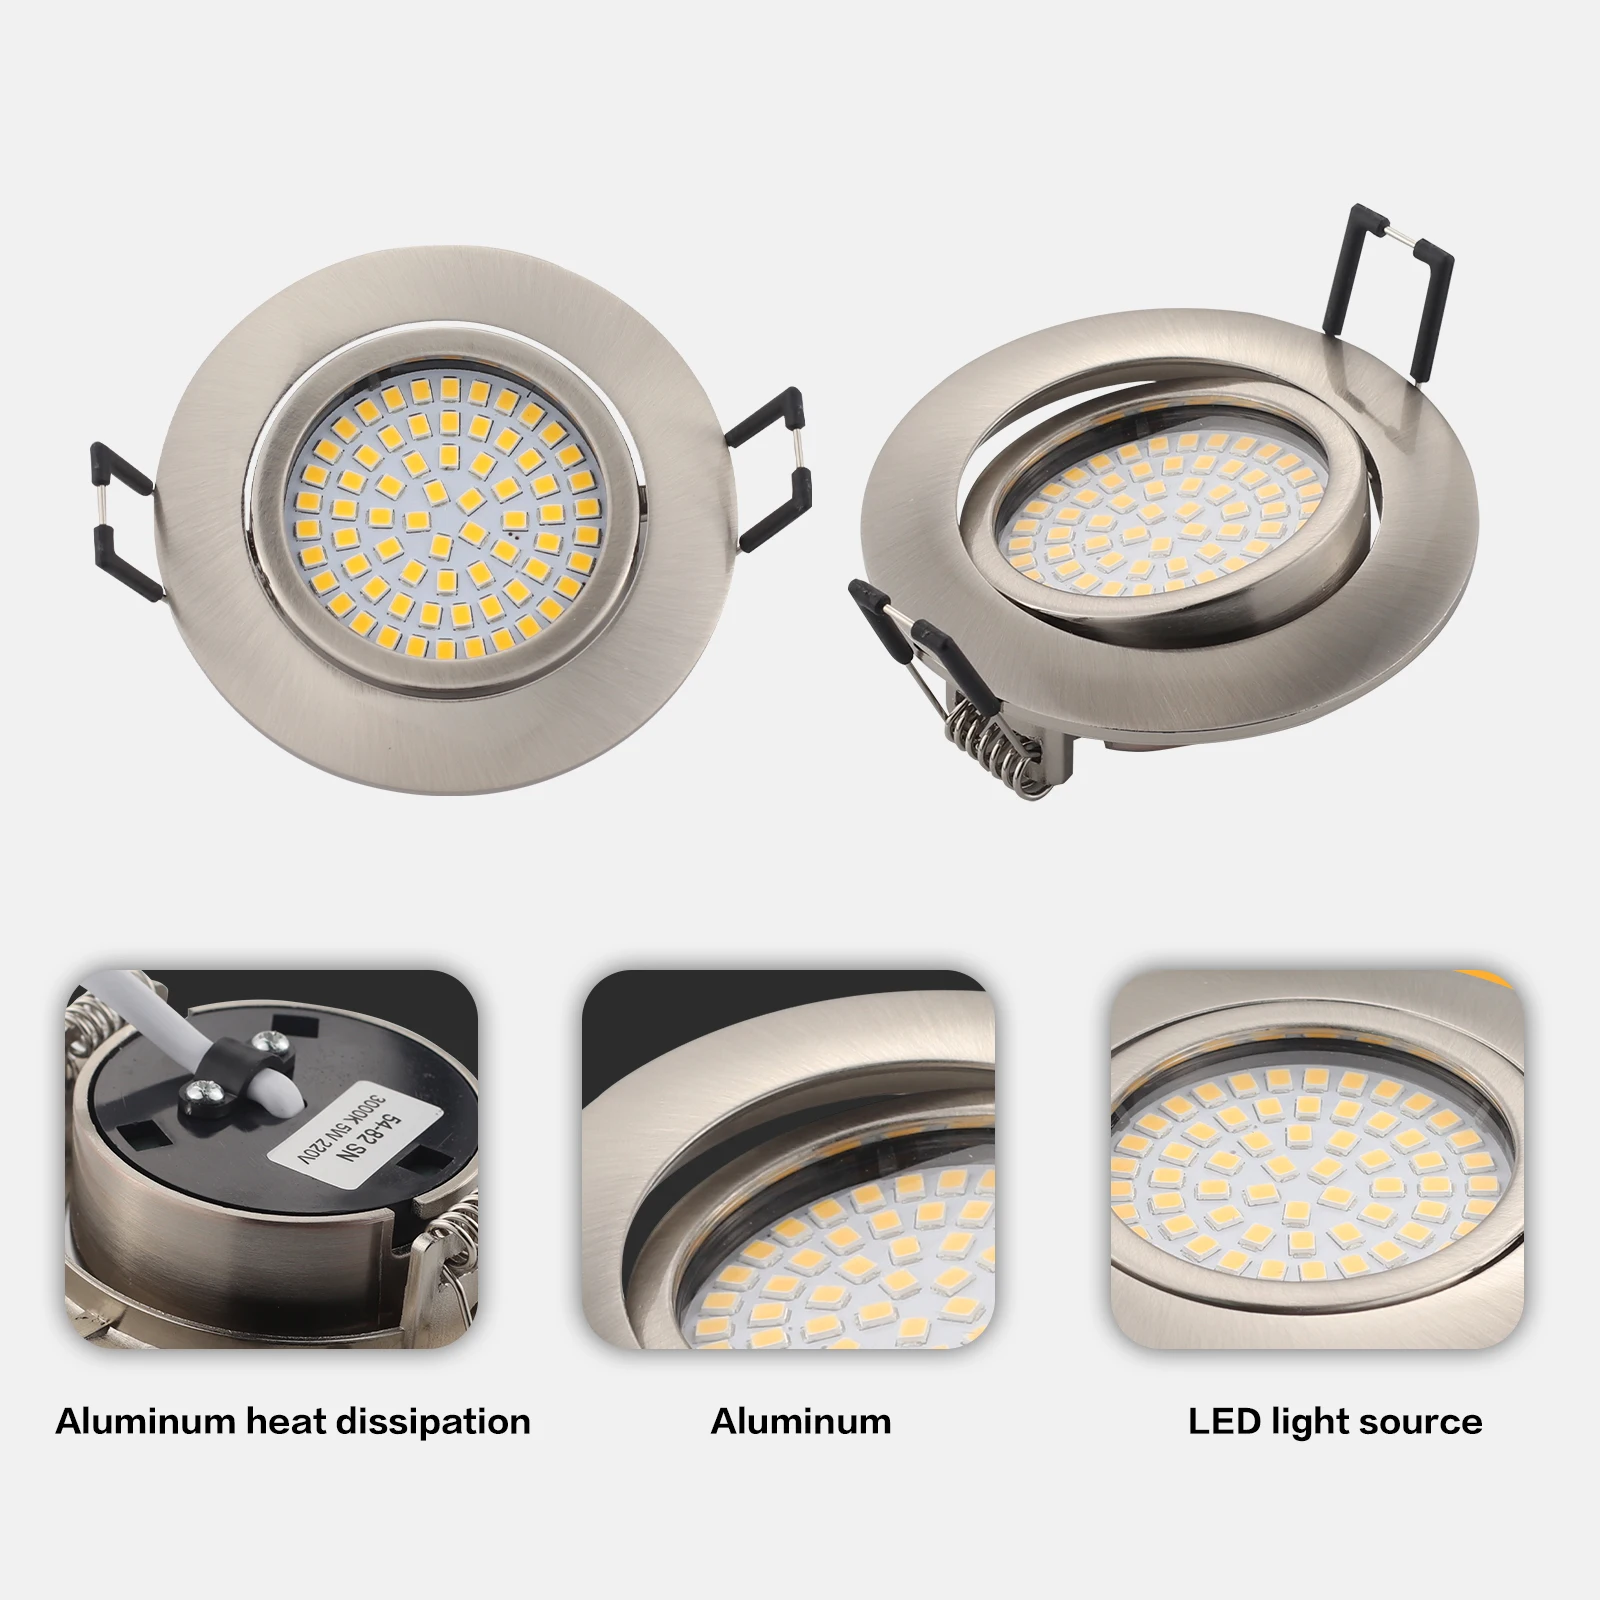 

Ceiling Adjustable Tilt Recessed 5W / 450lm Mains Powered Ultra Slim Ceiling Light Downlight Round Spot Lights for